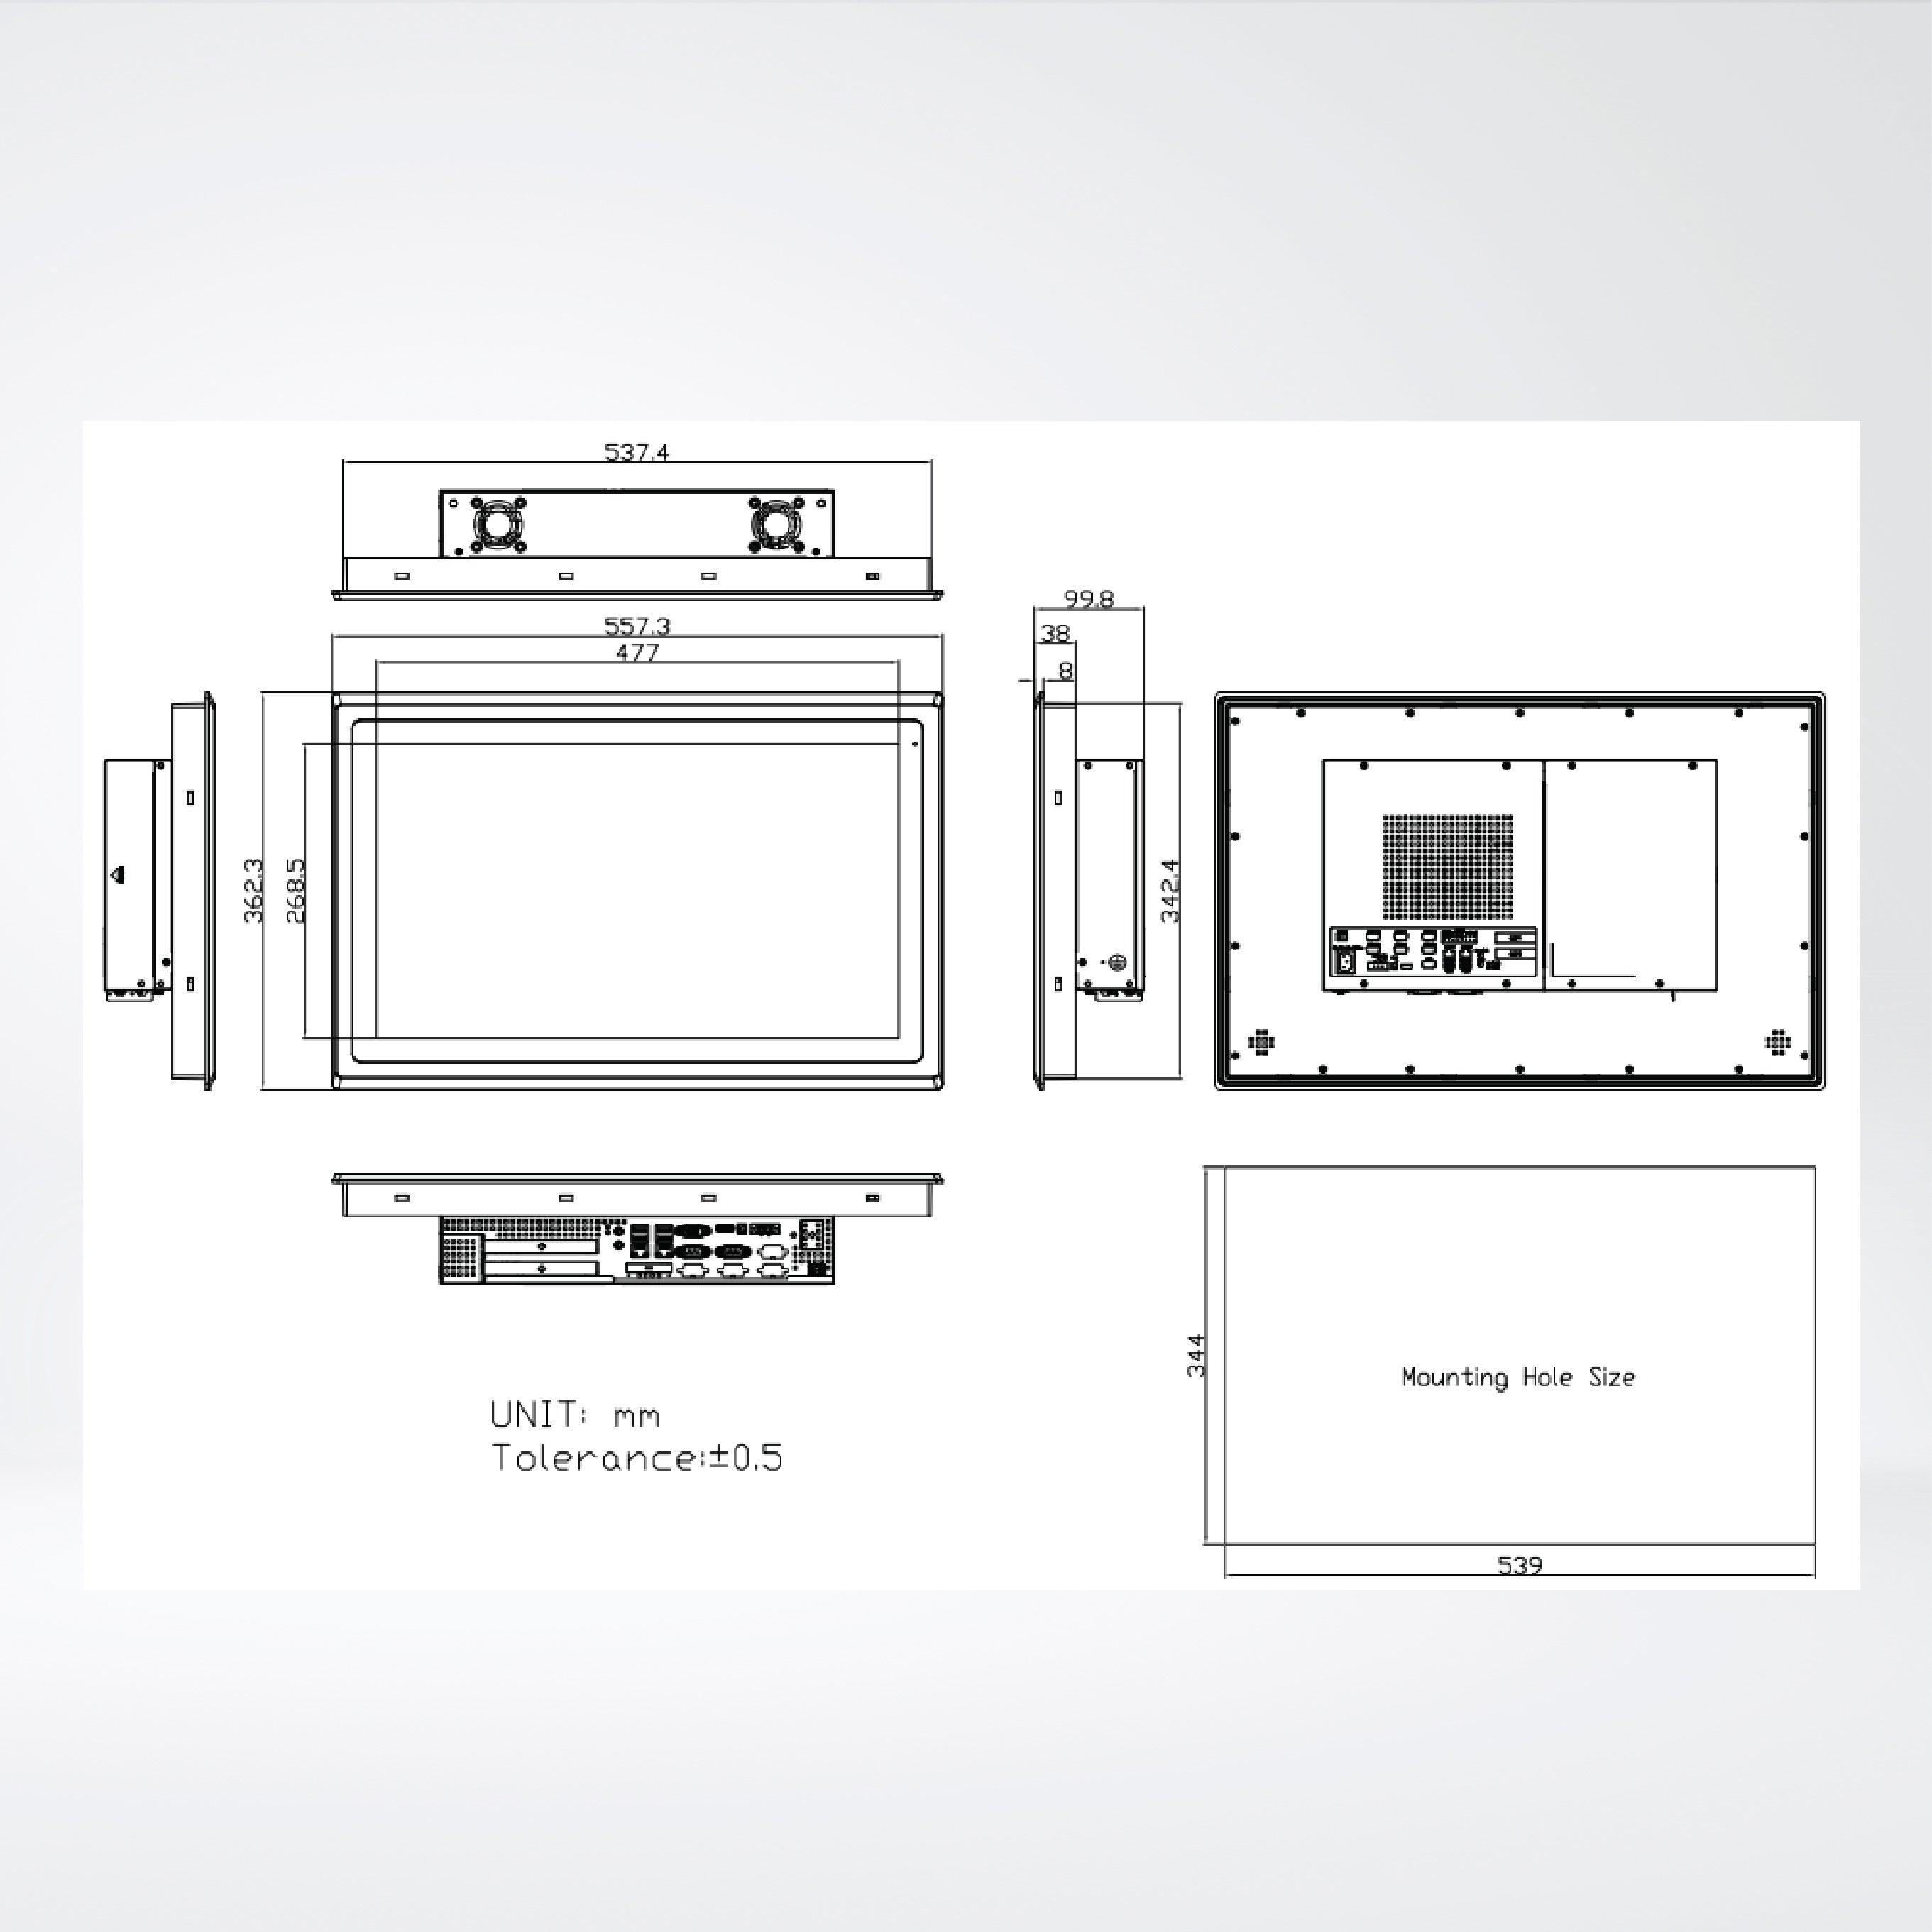 ViPAC-821GH 21.5” Intel Celeron N2930 Fanless Expandable Panel PC - Riverplus